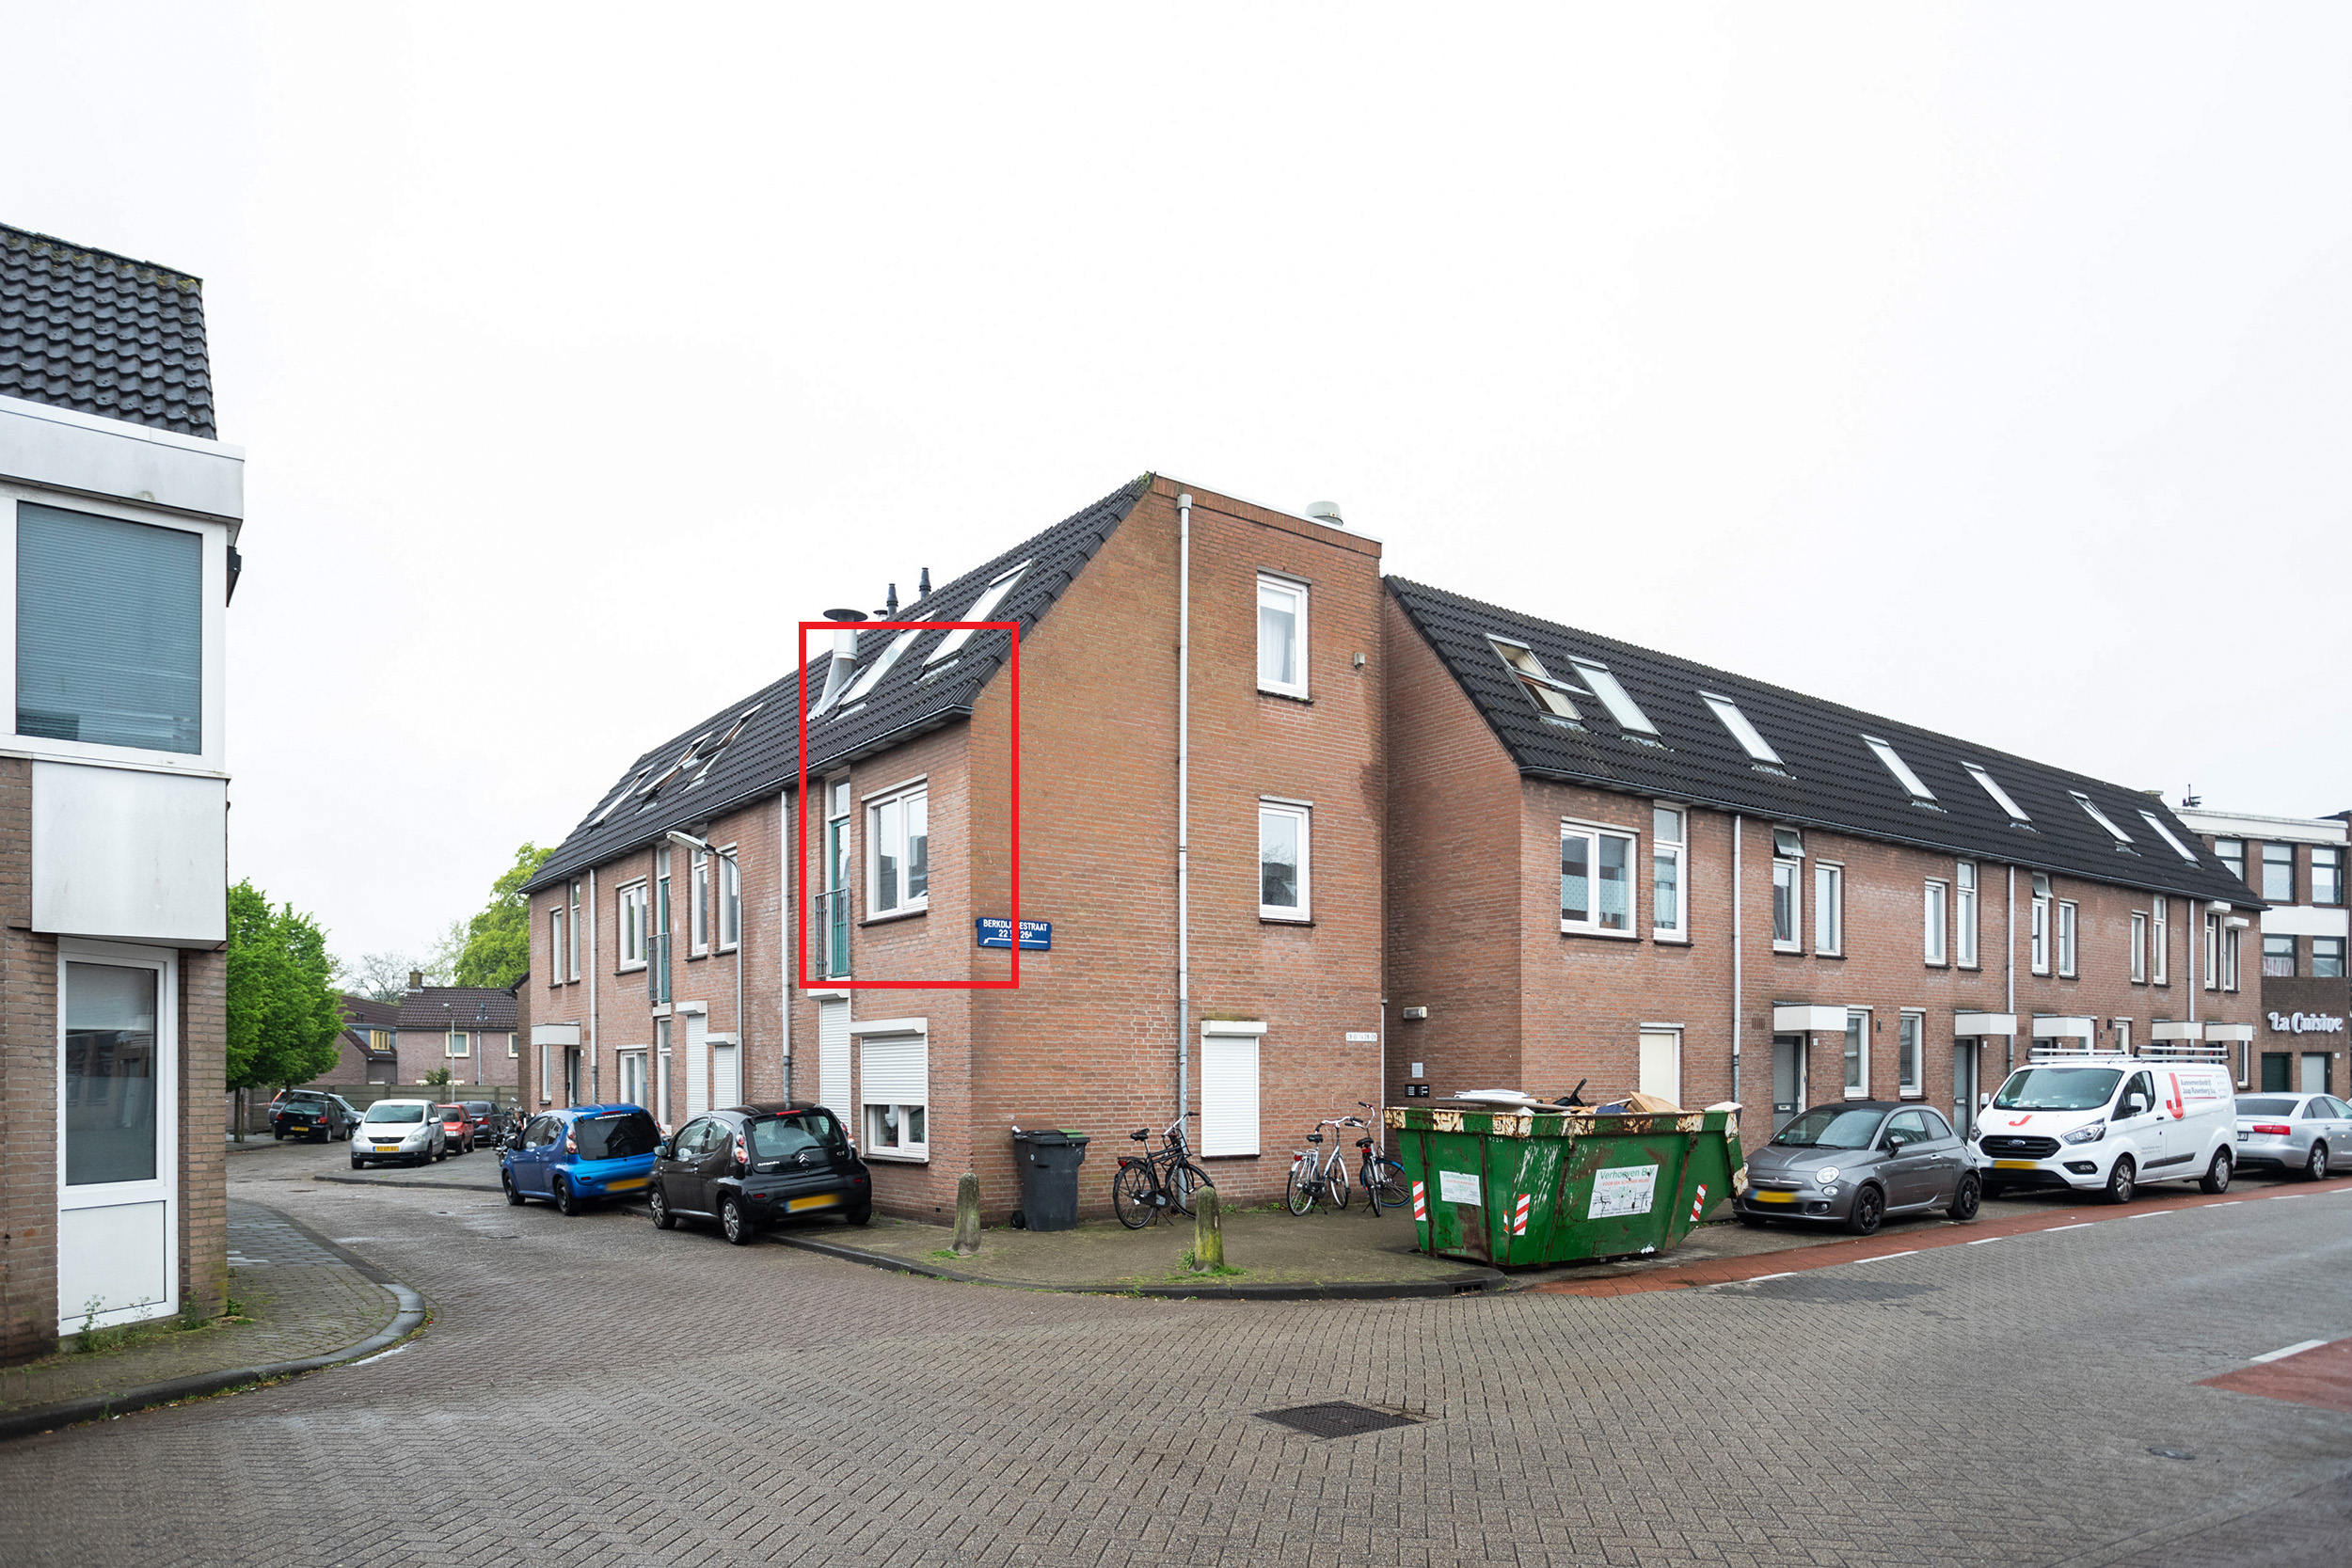 Berkdijksestraat 28, 5025 VG Tilburg, Nederland